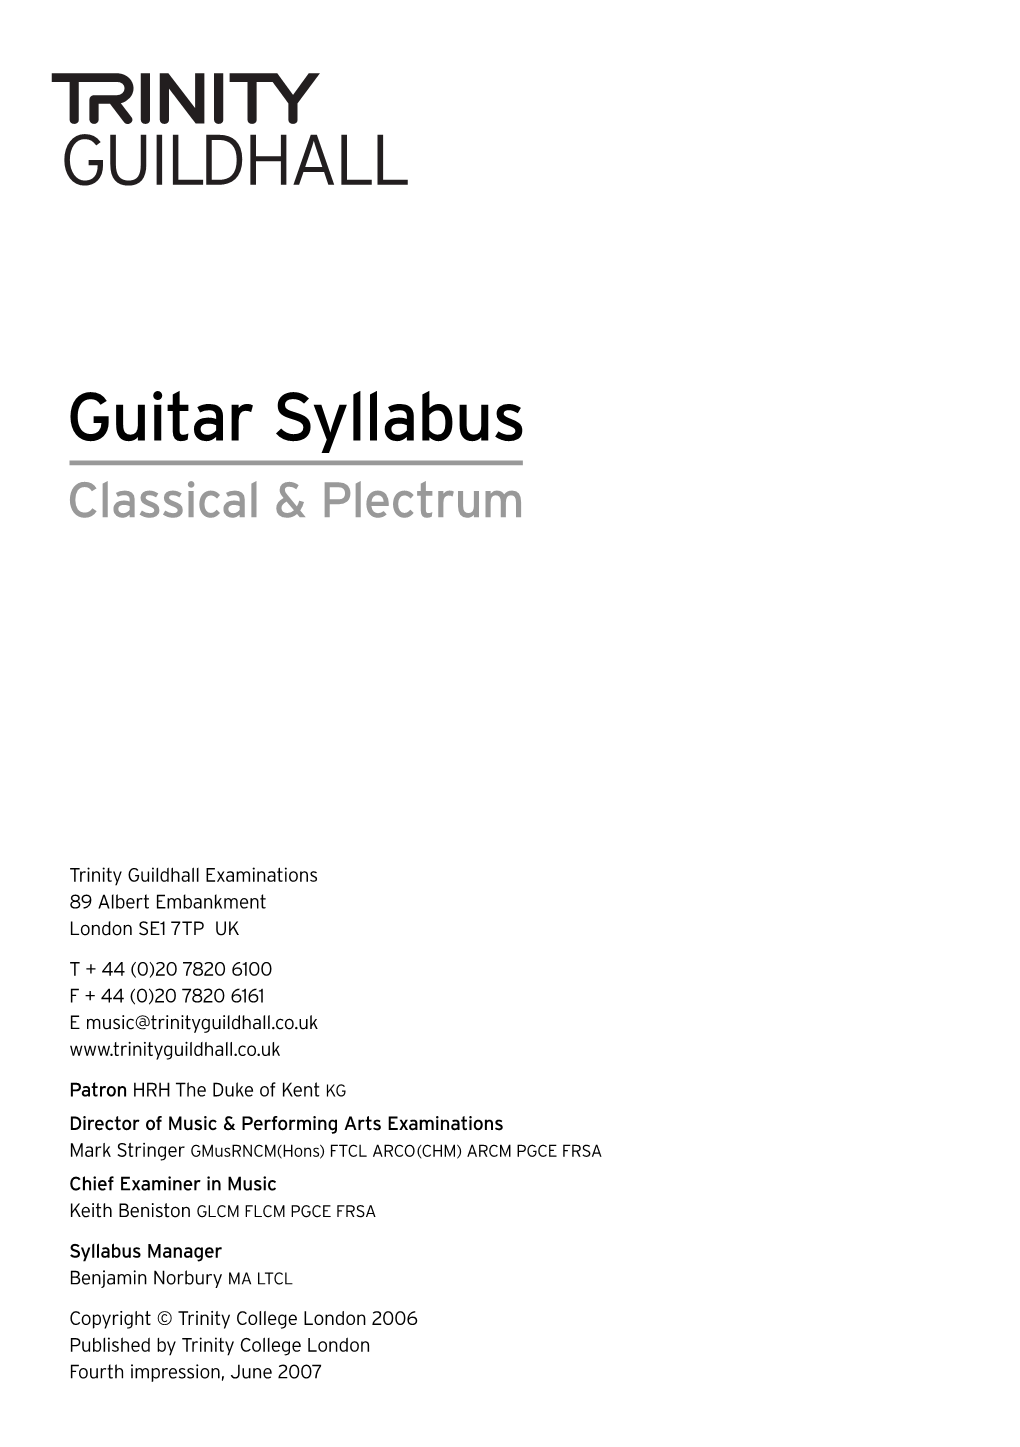 Guitar Syllabus Quark with Corrections.Qxd